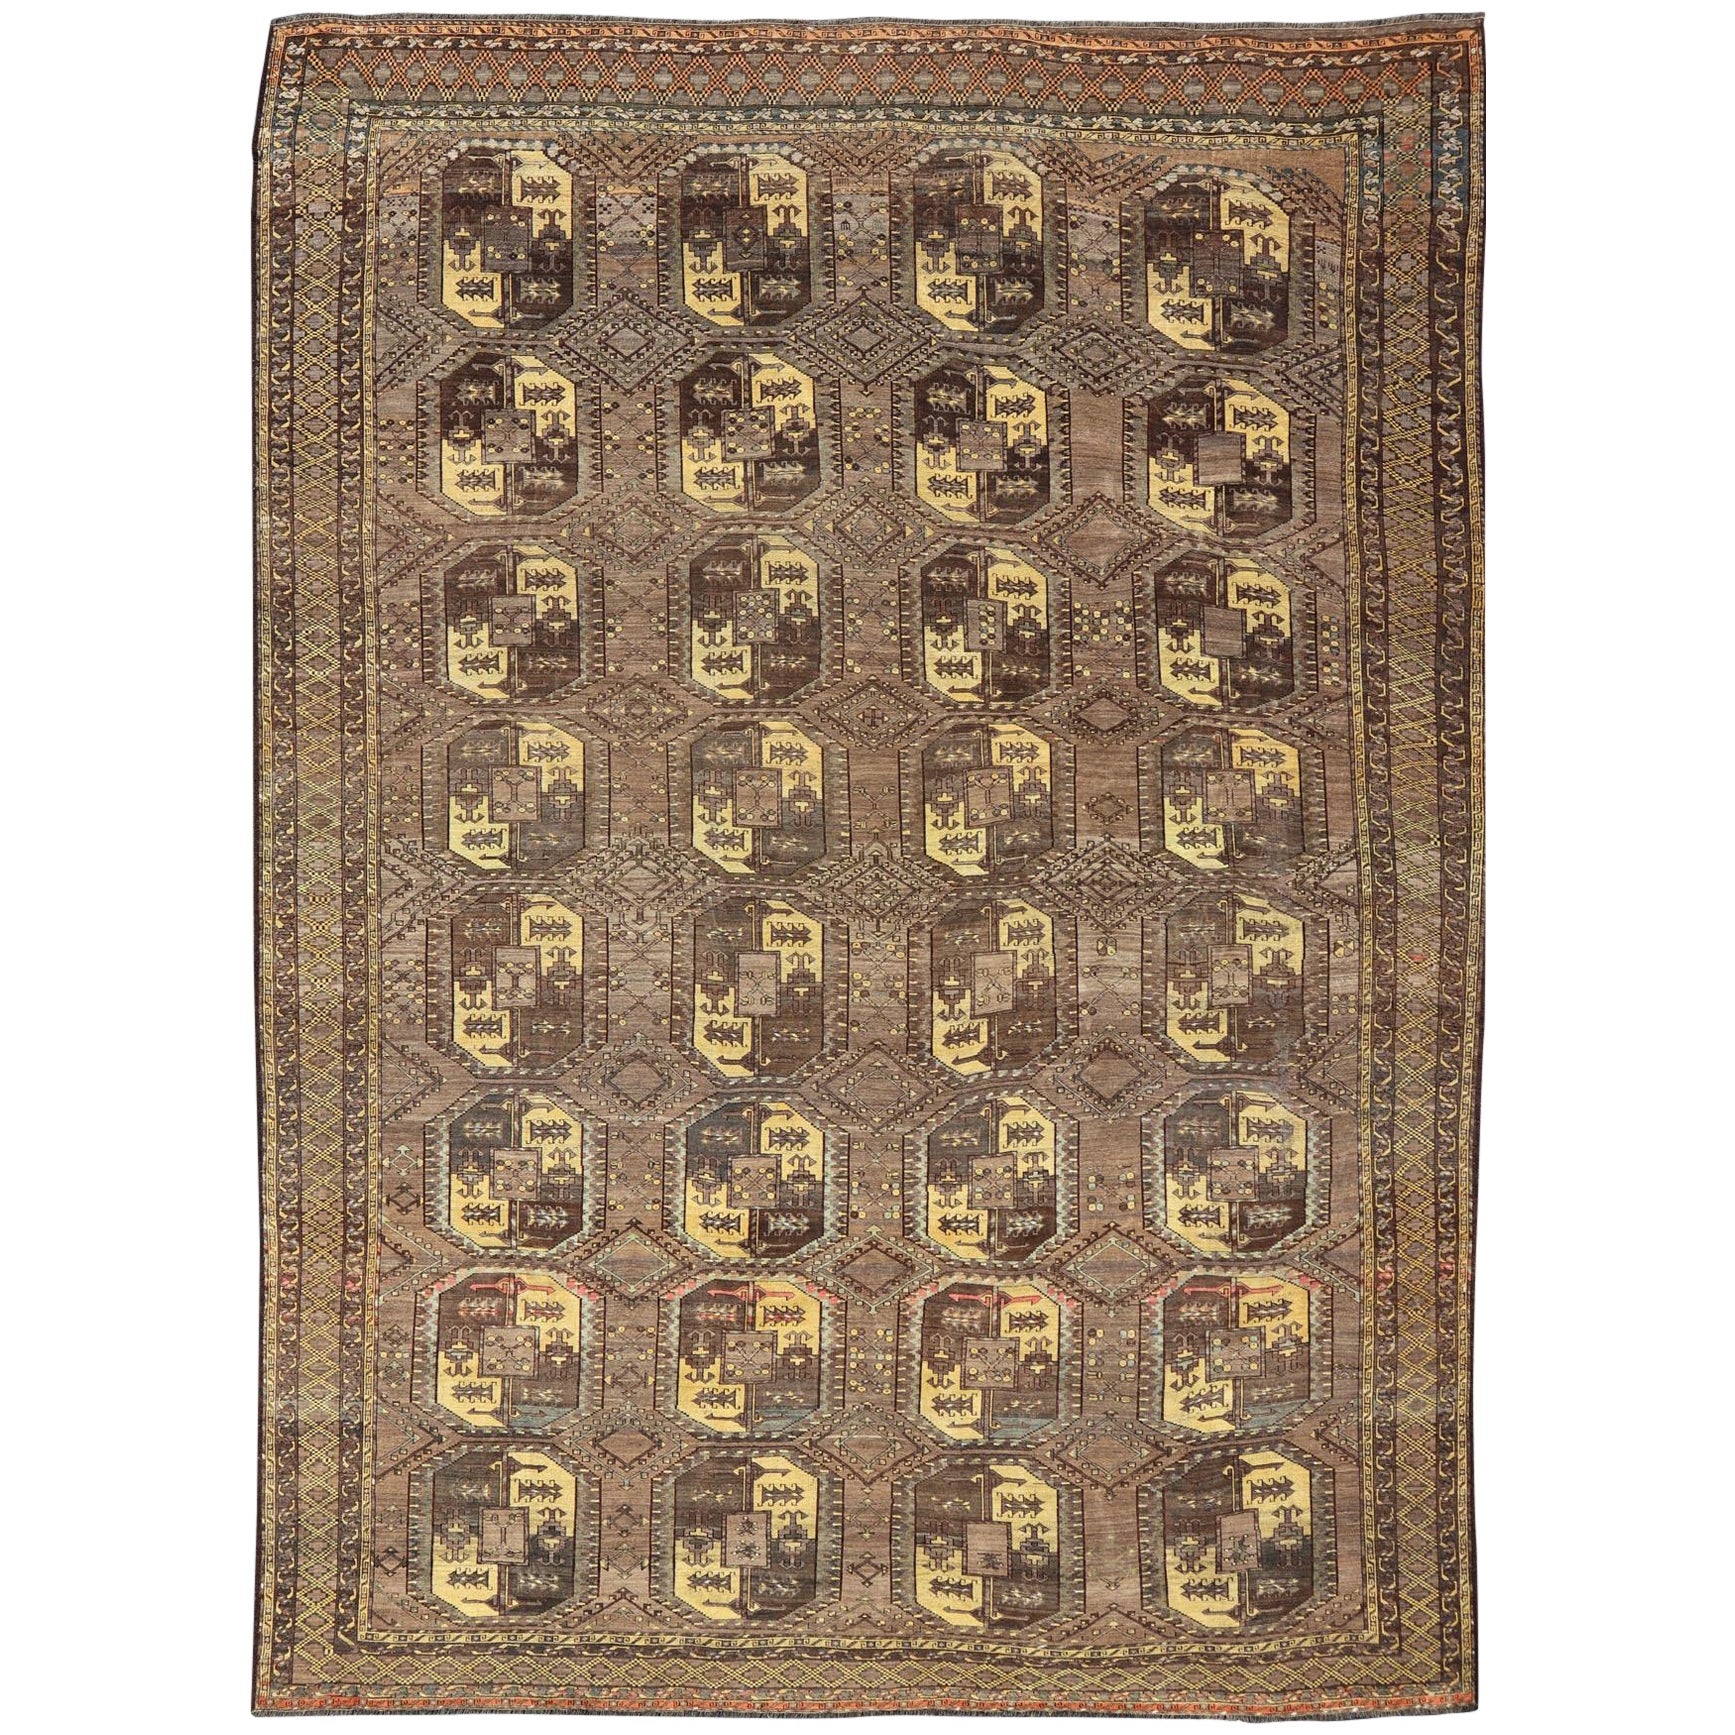 Grand tapis Turkomen Ersari avec motif Bokhara sur toute sa surface en brun, café et jaune